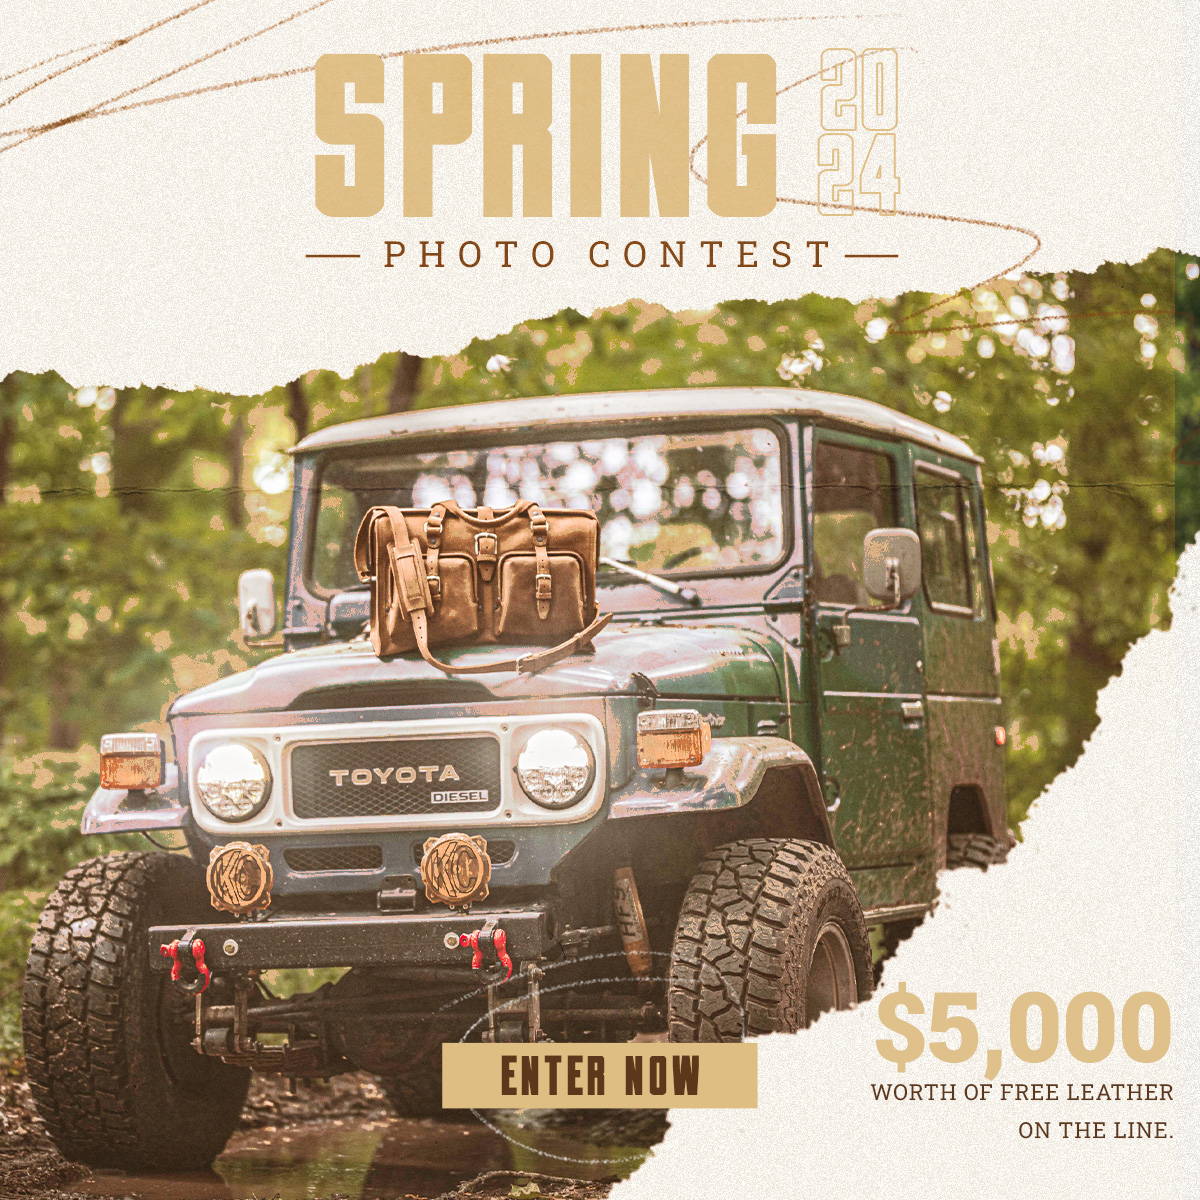 Photo Contest - Enter Now